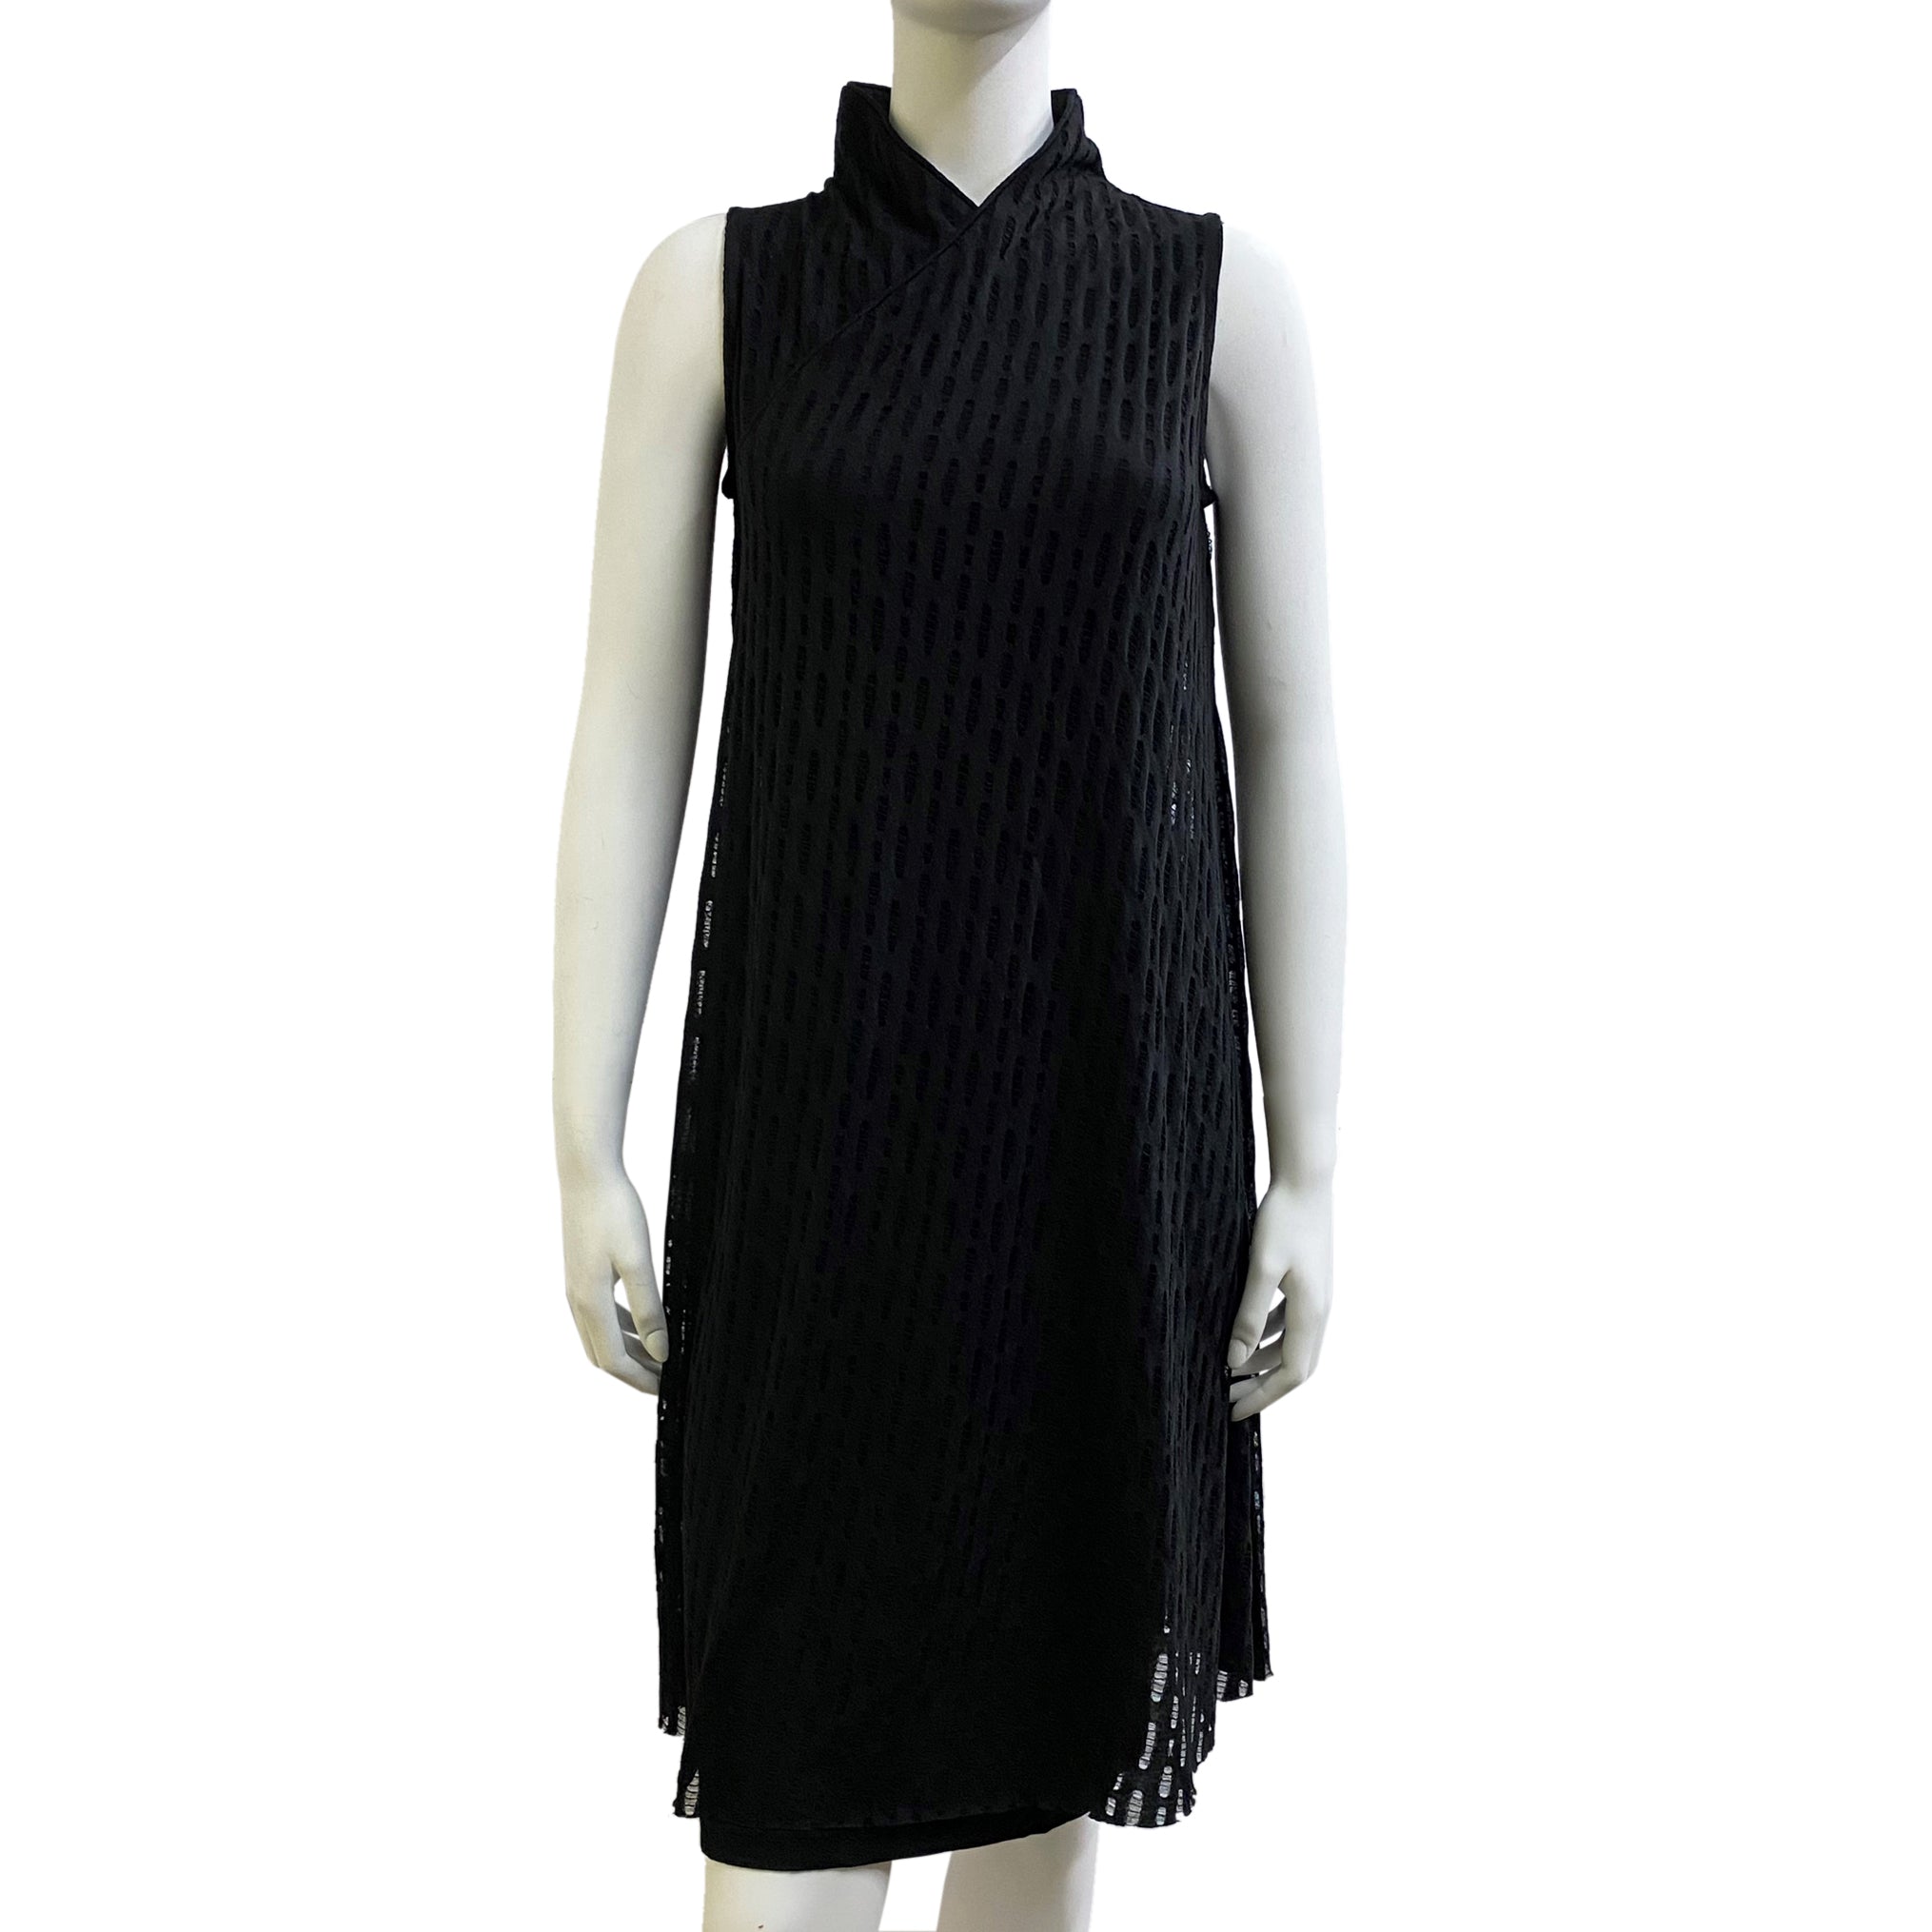 Two-Layer Sleeveless Qipao dress, Black/Net